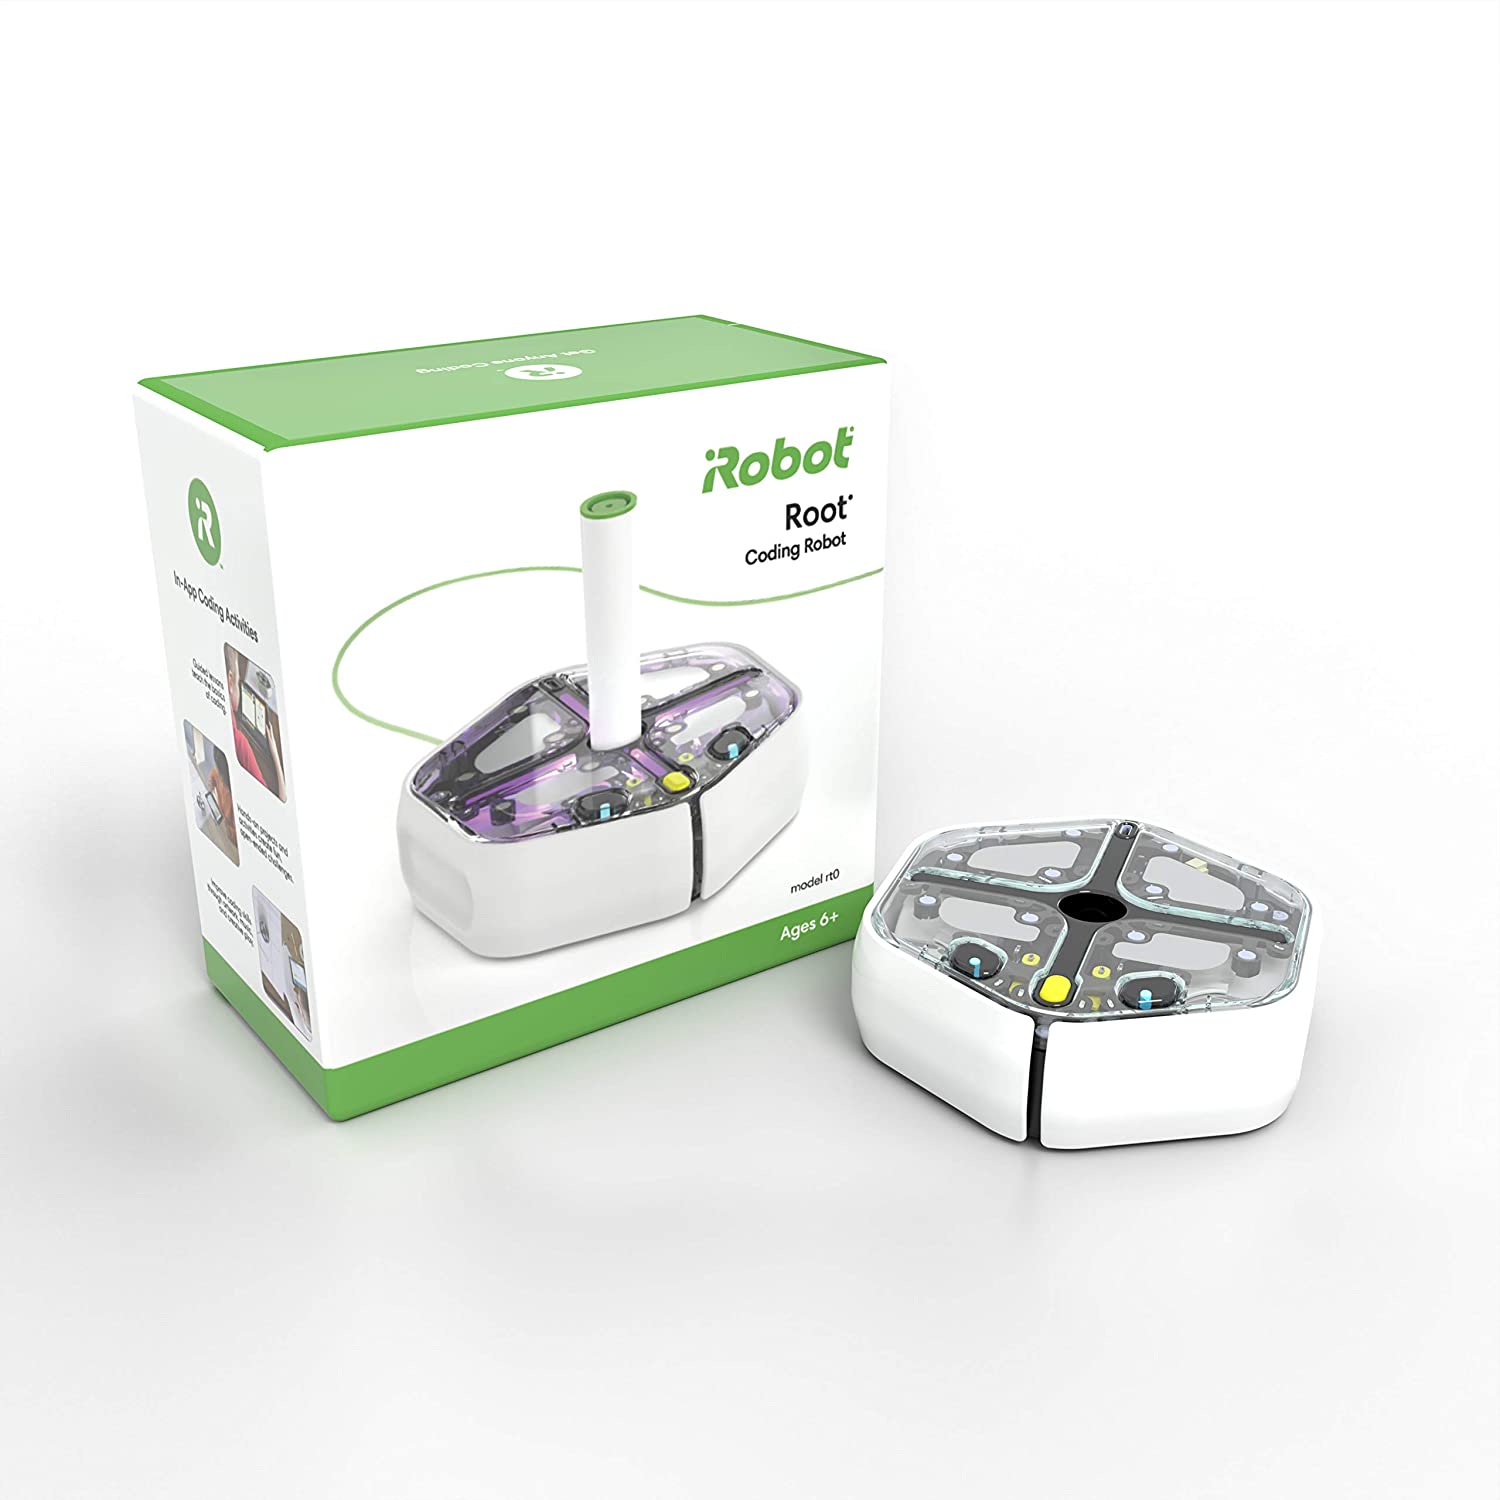 iRobot Root rt0 Coding Robot w/ Brick Top Bundle $60 + Free Shipping w/ Prime